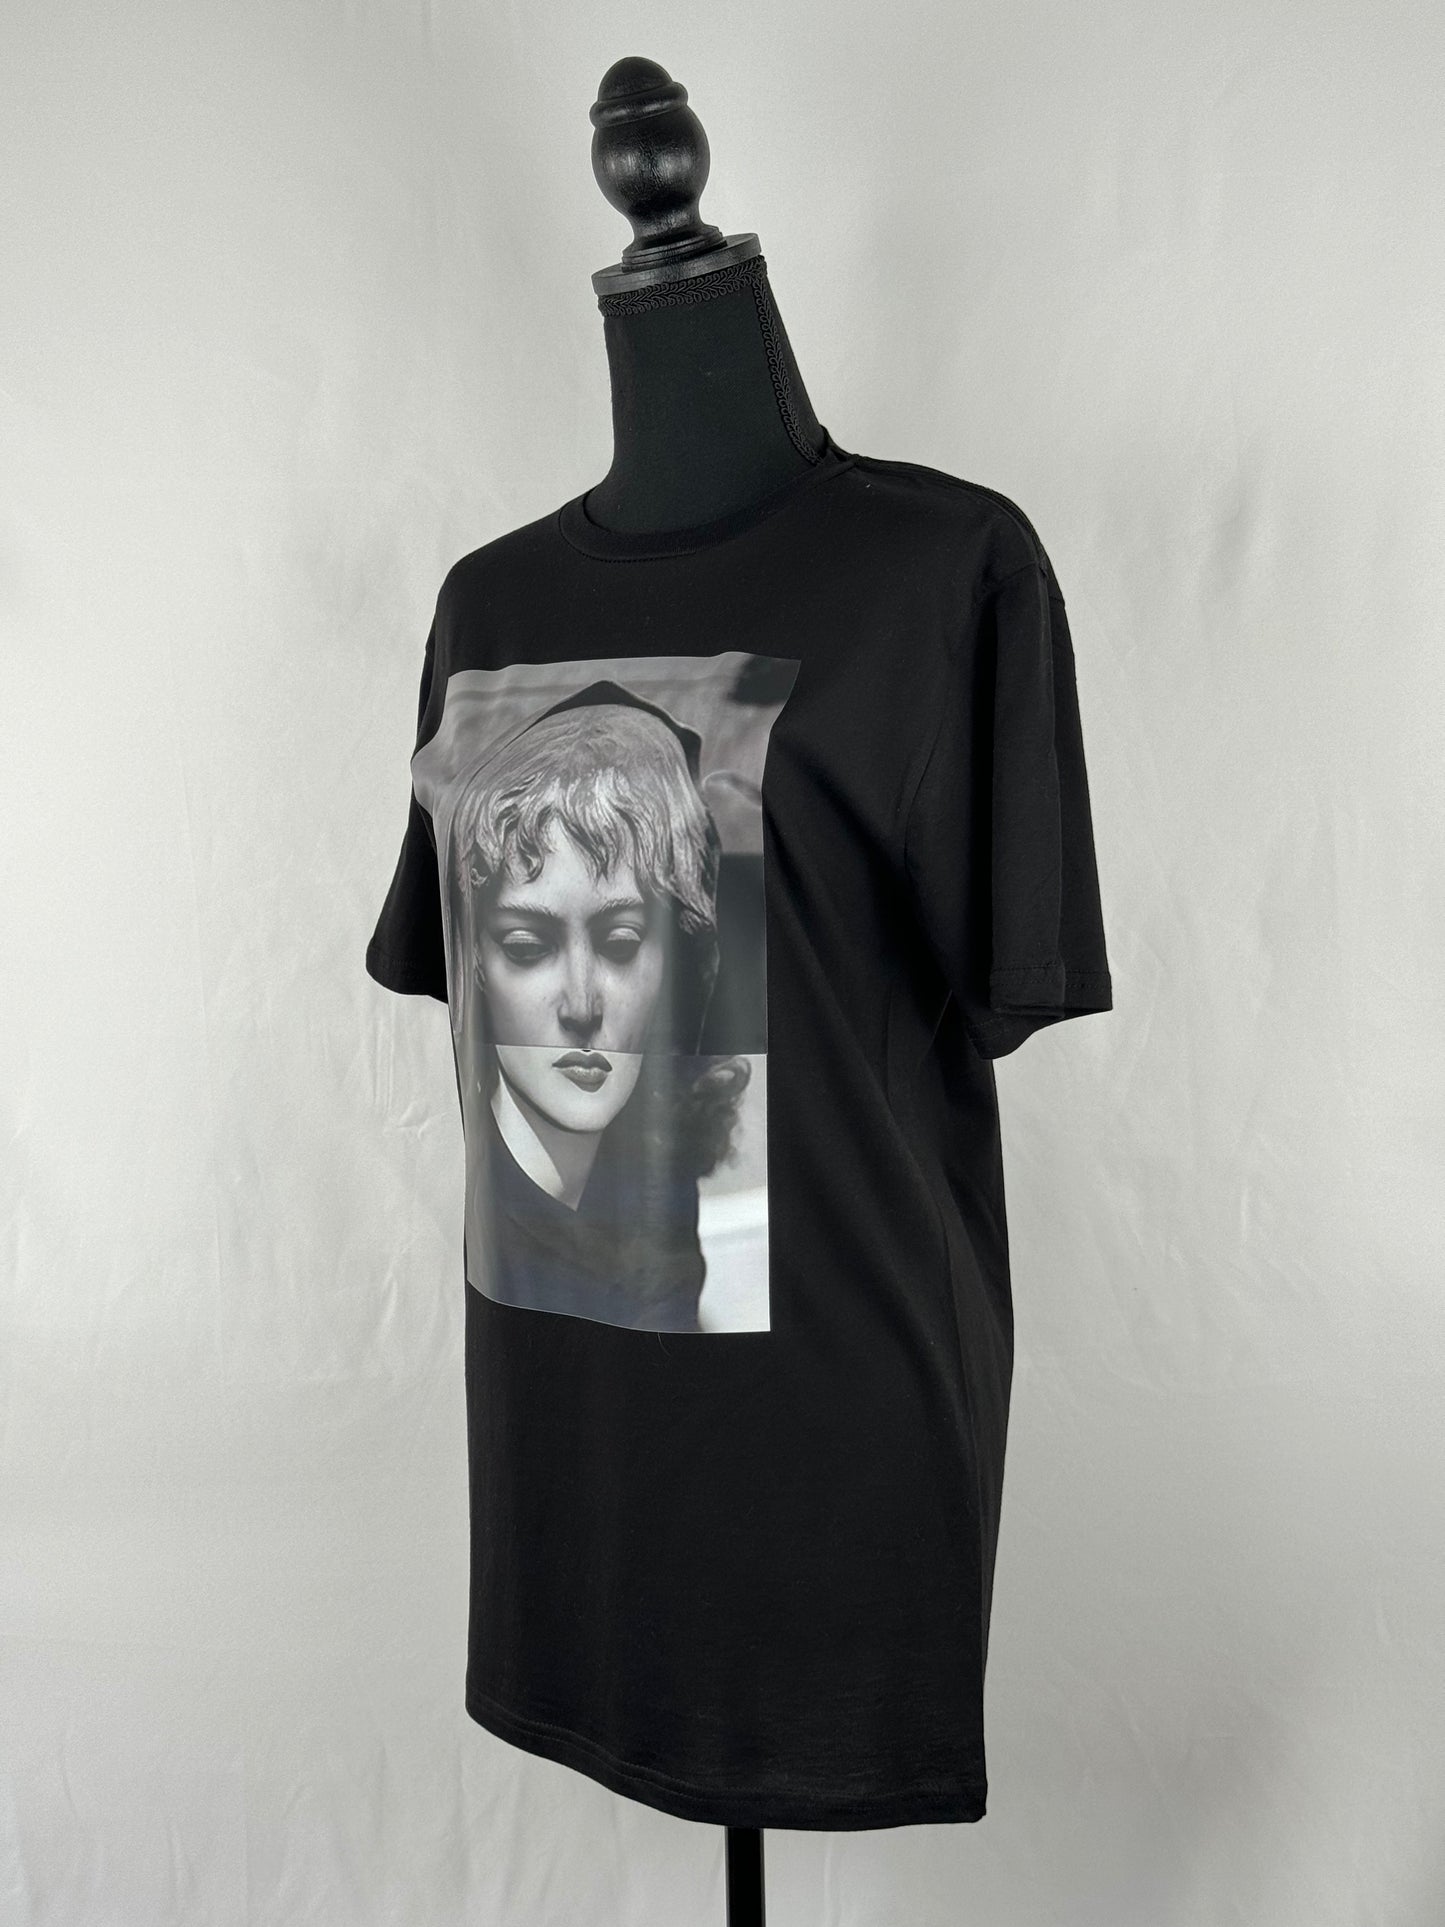 Monochrome Muse Portrait T-Shirt | AdRa Apparel